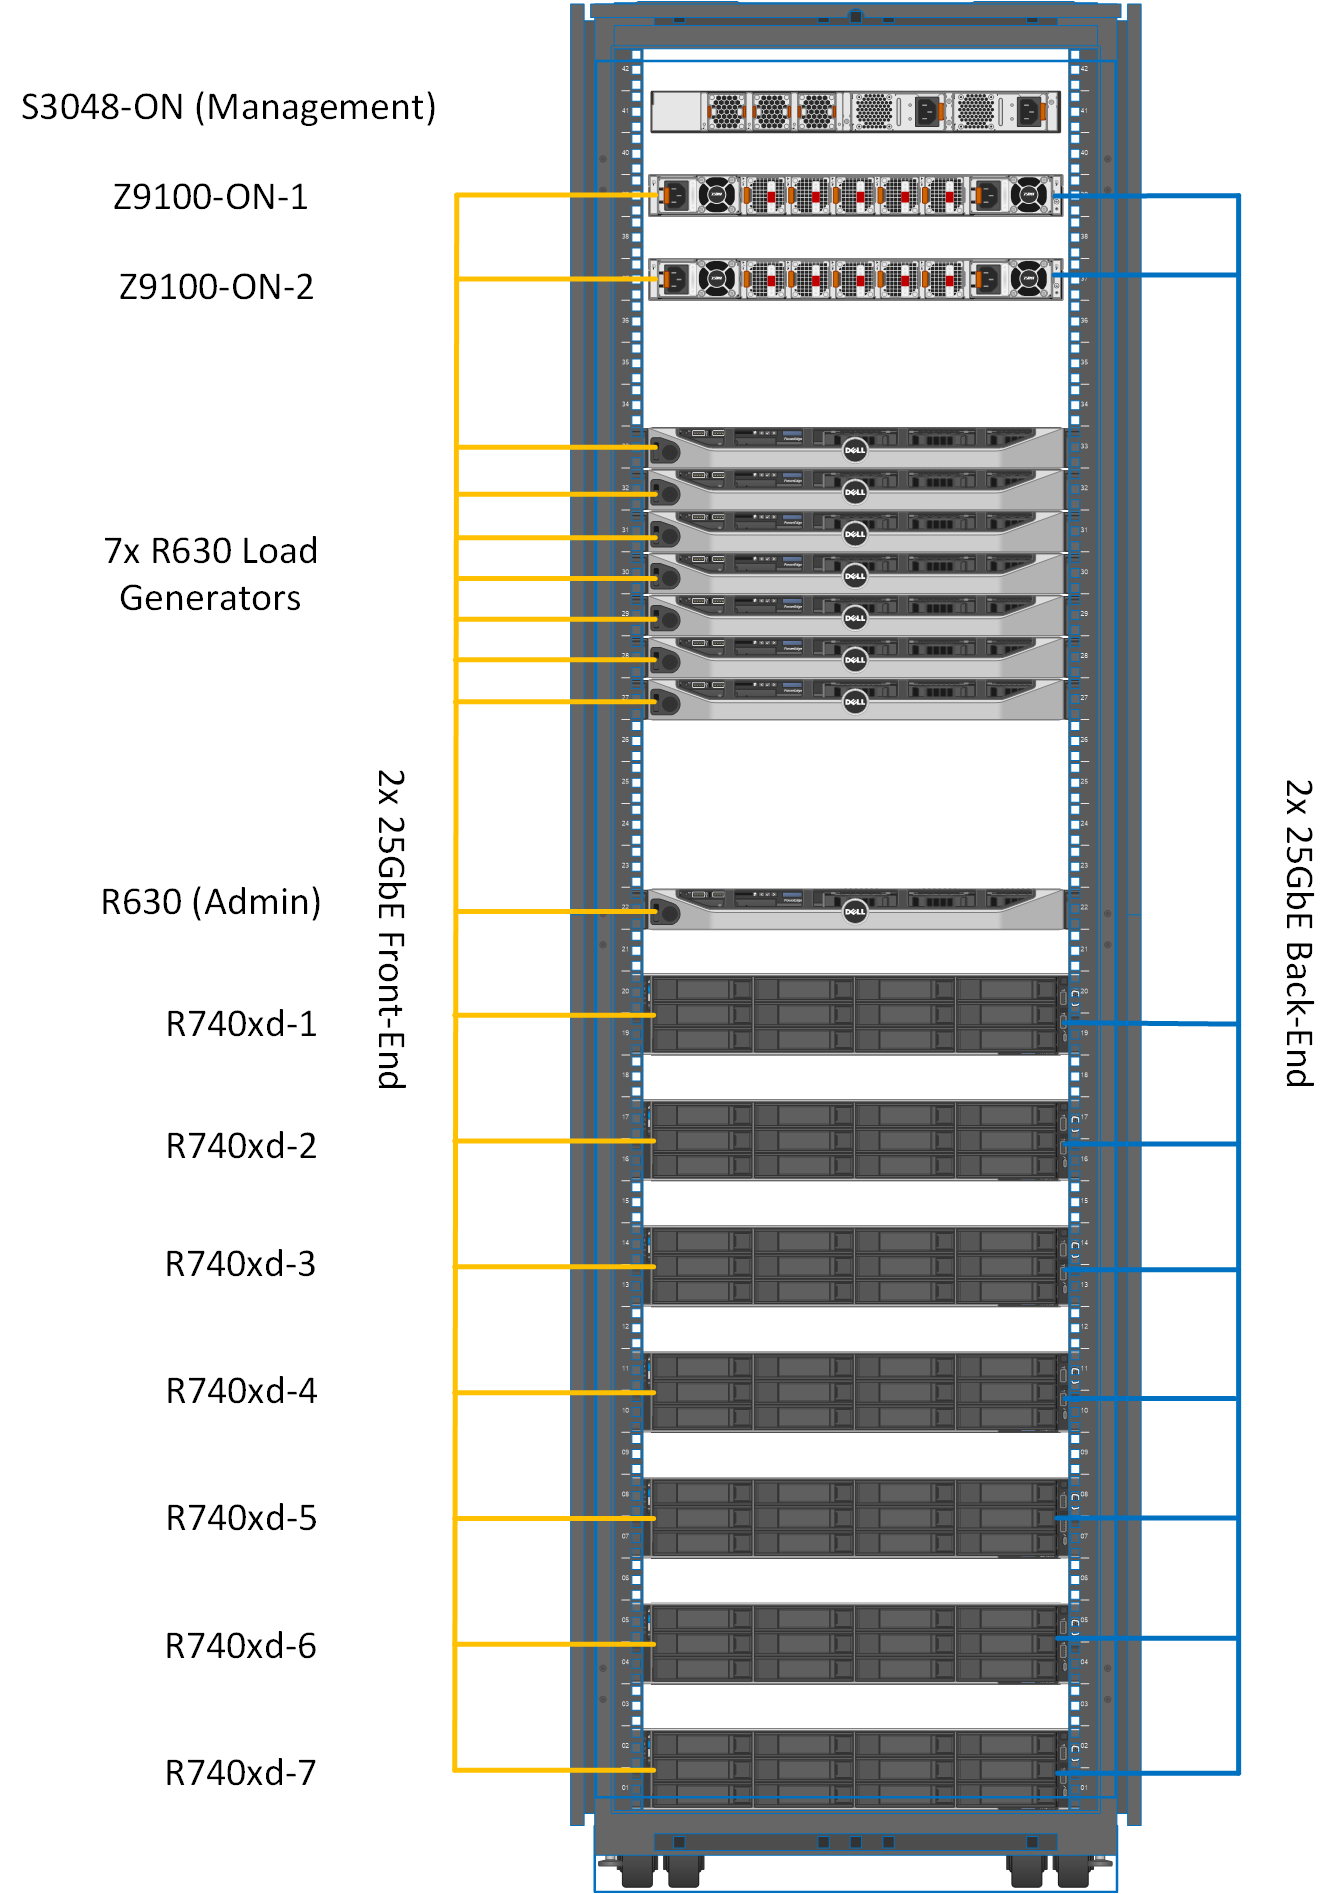 Figure 1: Lab Rack Design